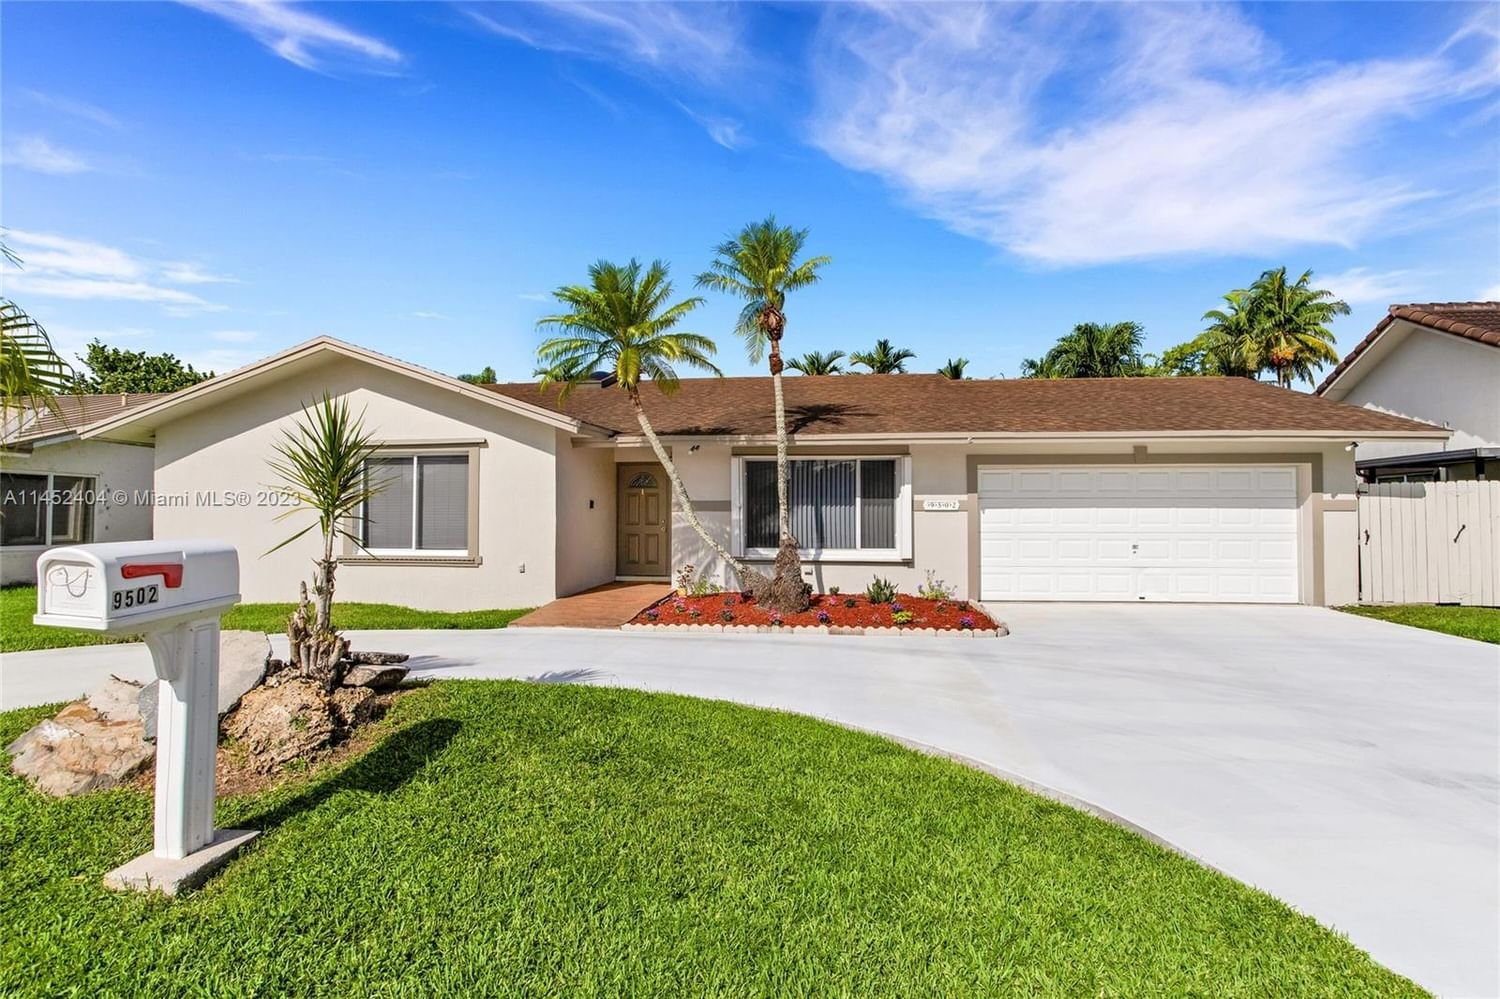 Real estate property located at 9502 127th Ave, Miami-Dade County, Miami, FL